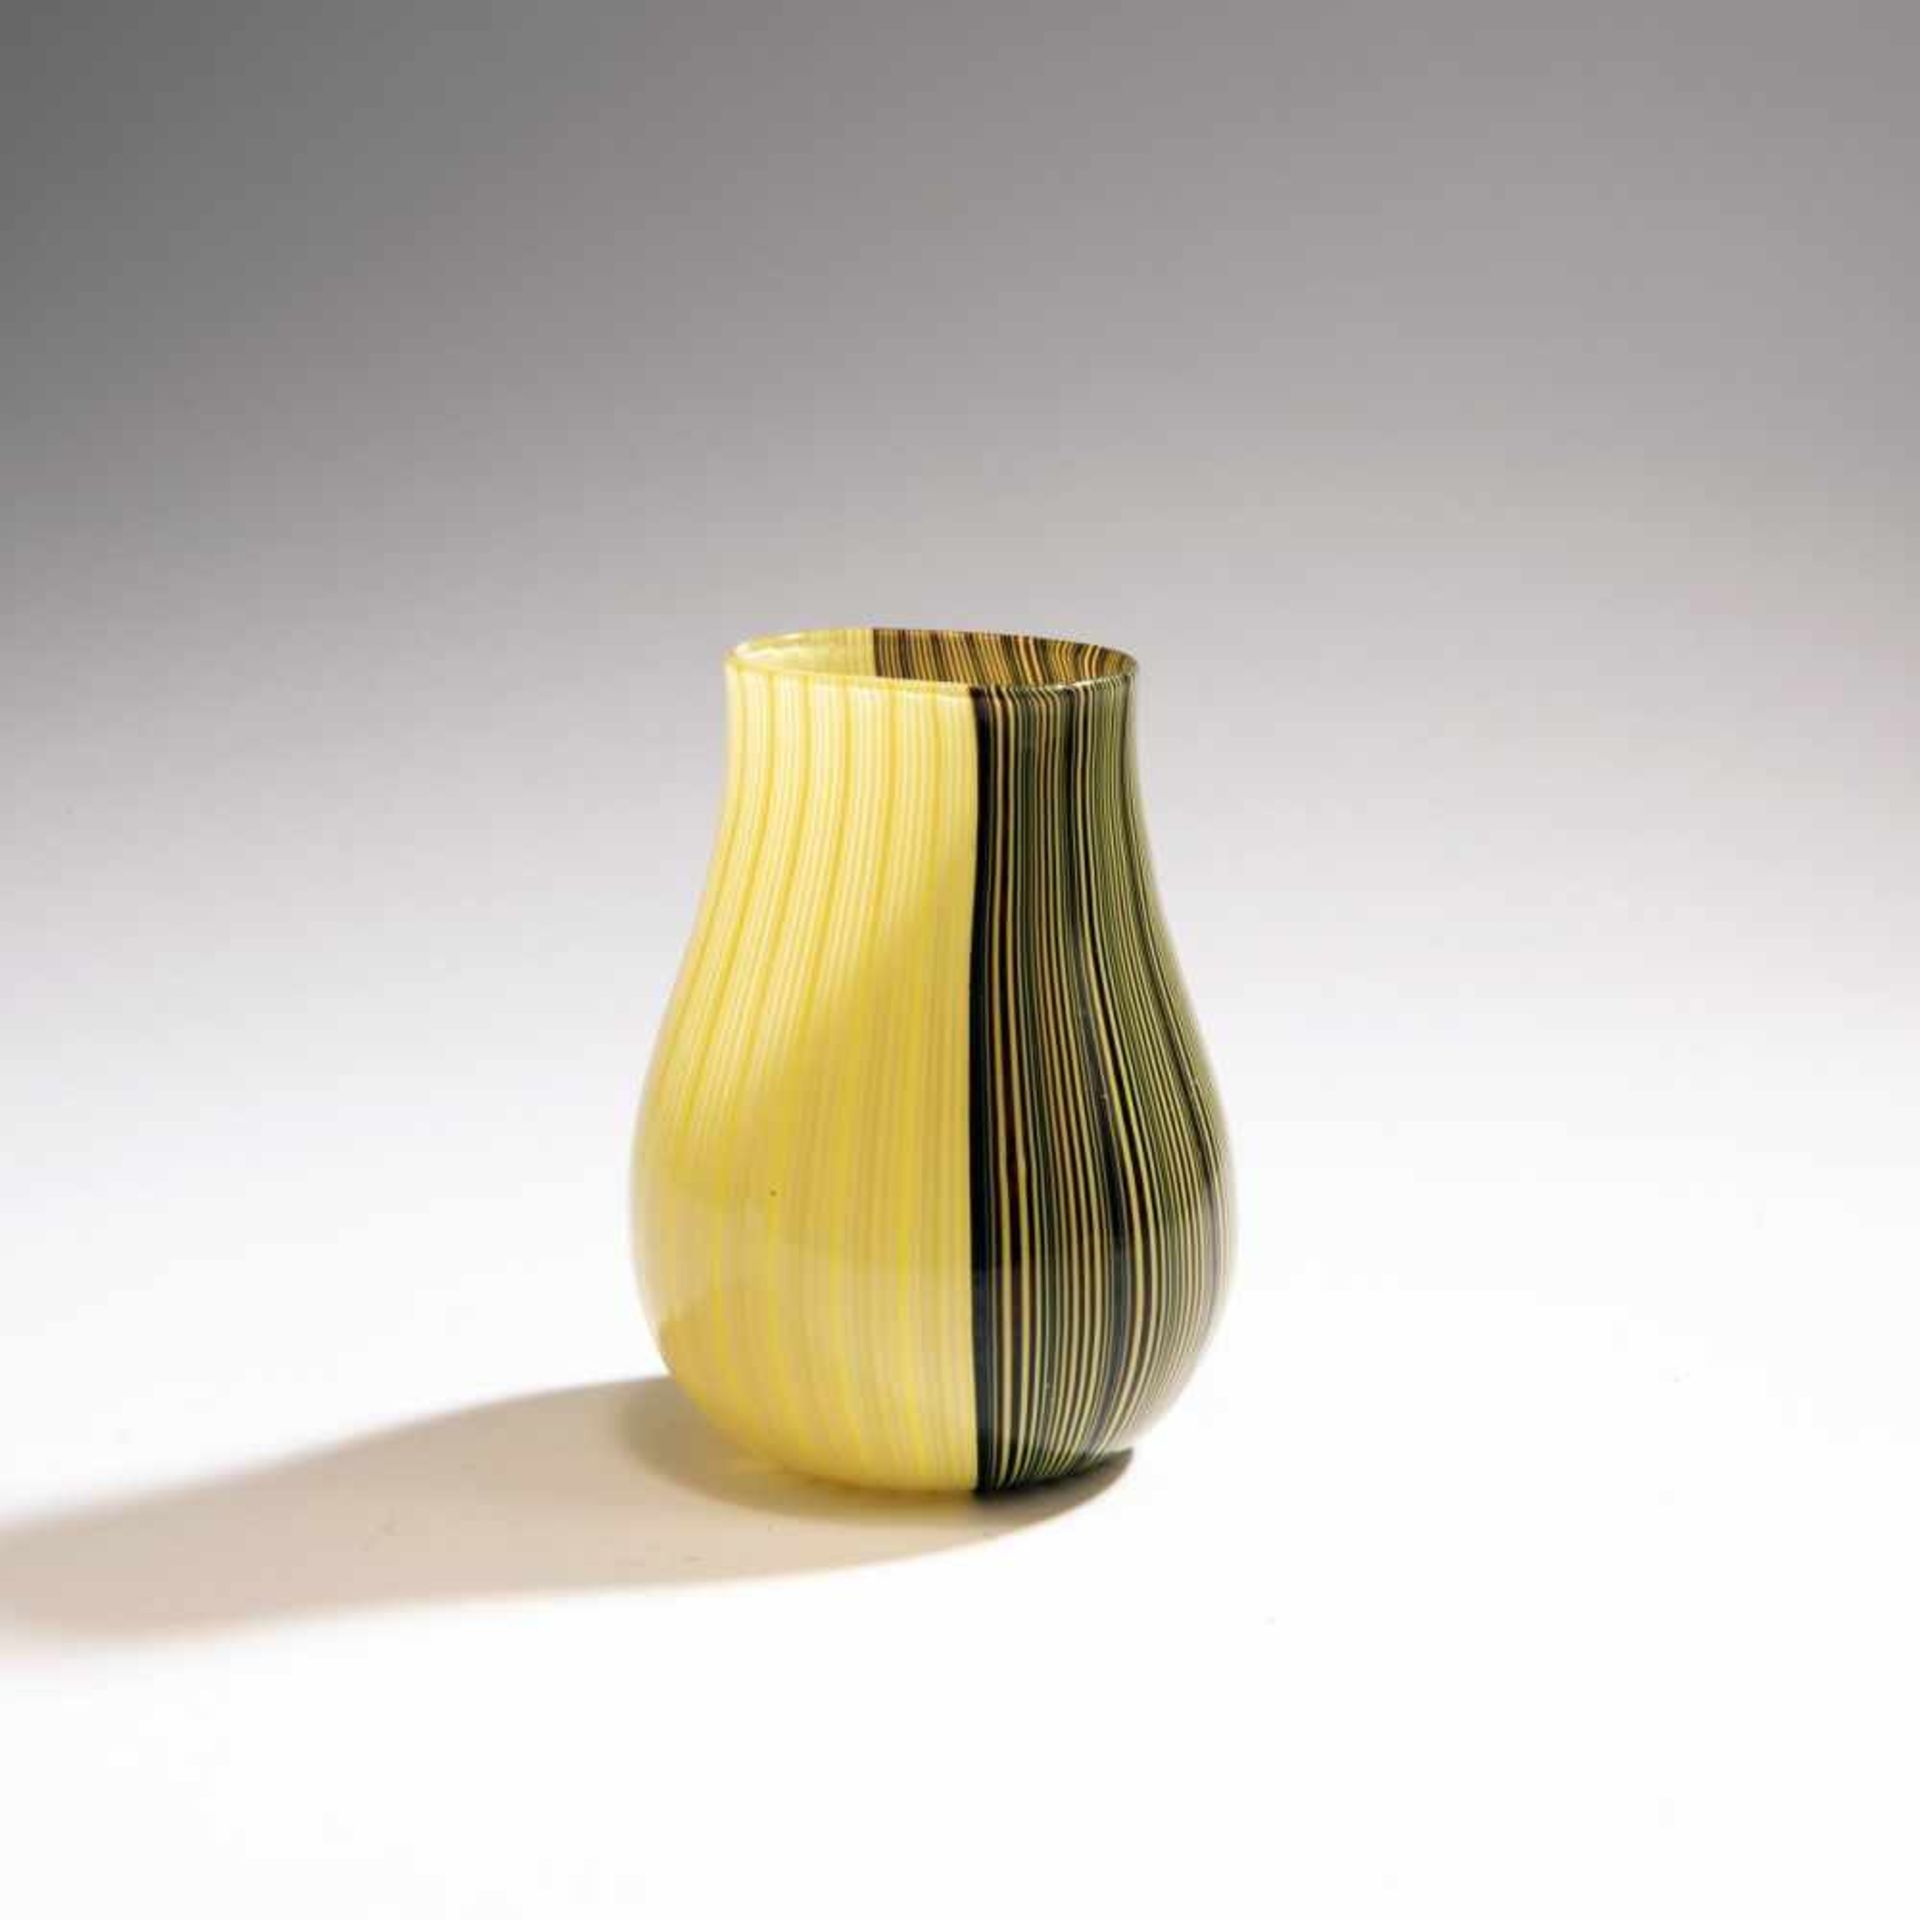 Carlo Scarpa, 'Tessuto bicolore' vase, c. 1945-48'Tessuto bicolore' vase, c. 1945-48Model no.